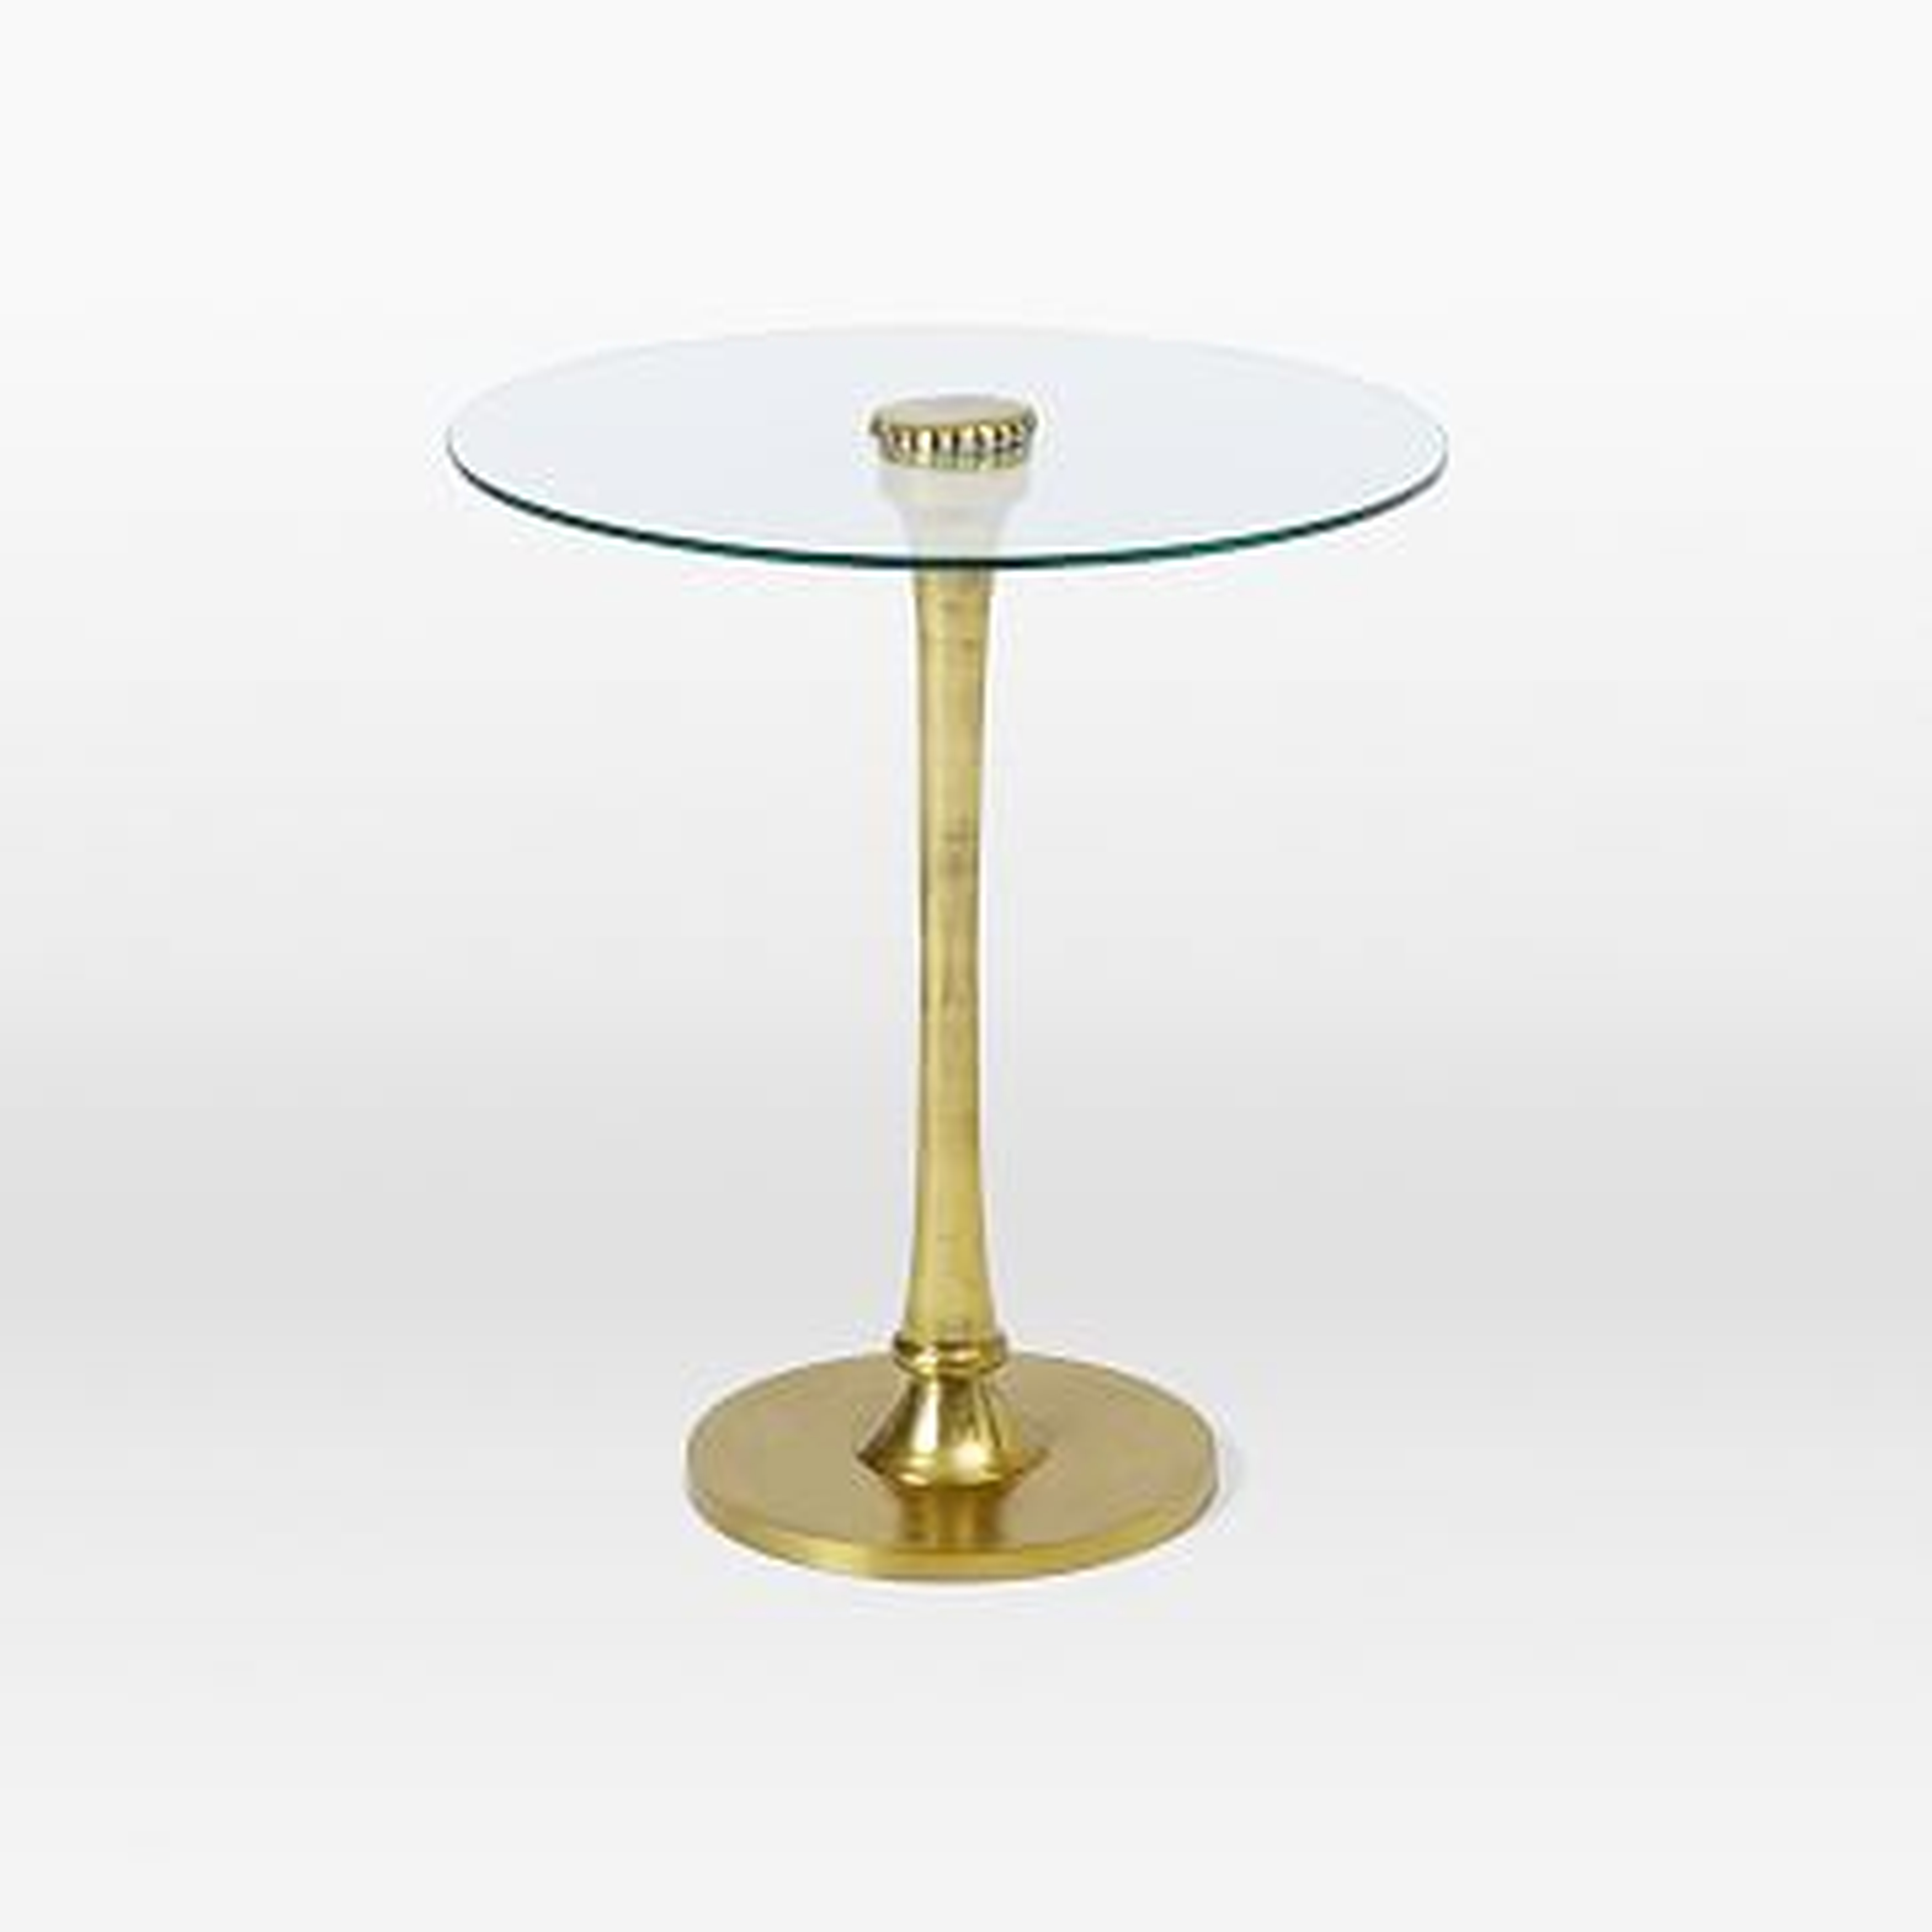 Molded Brass Side Table - West Elm